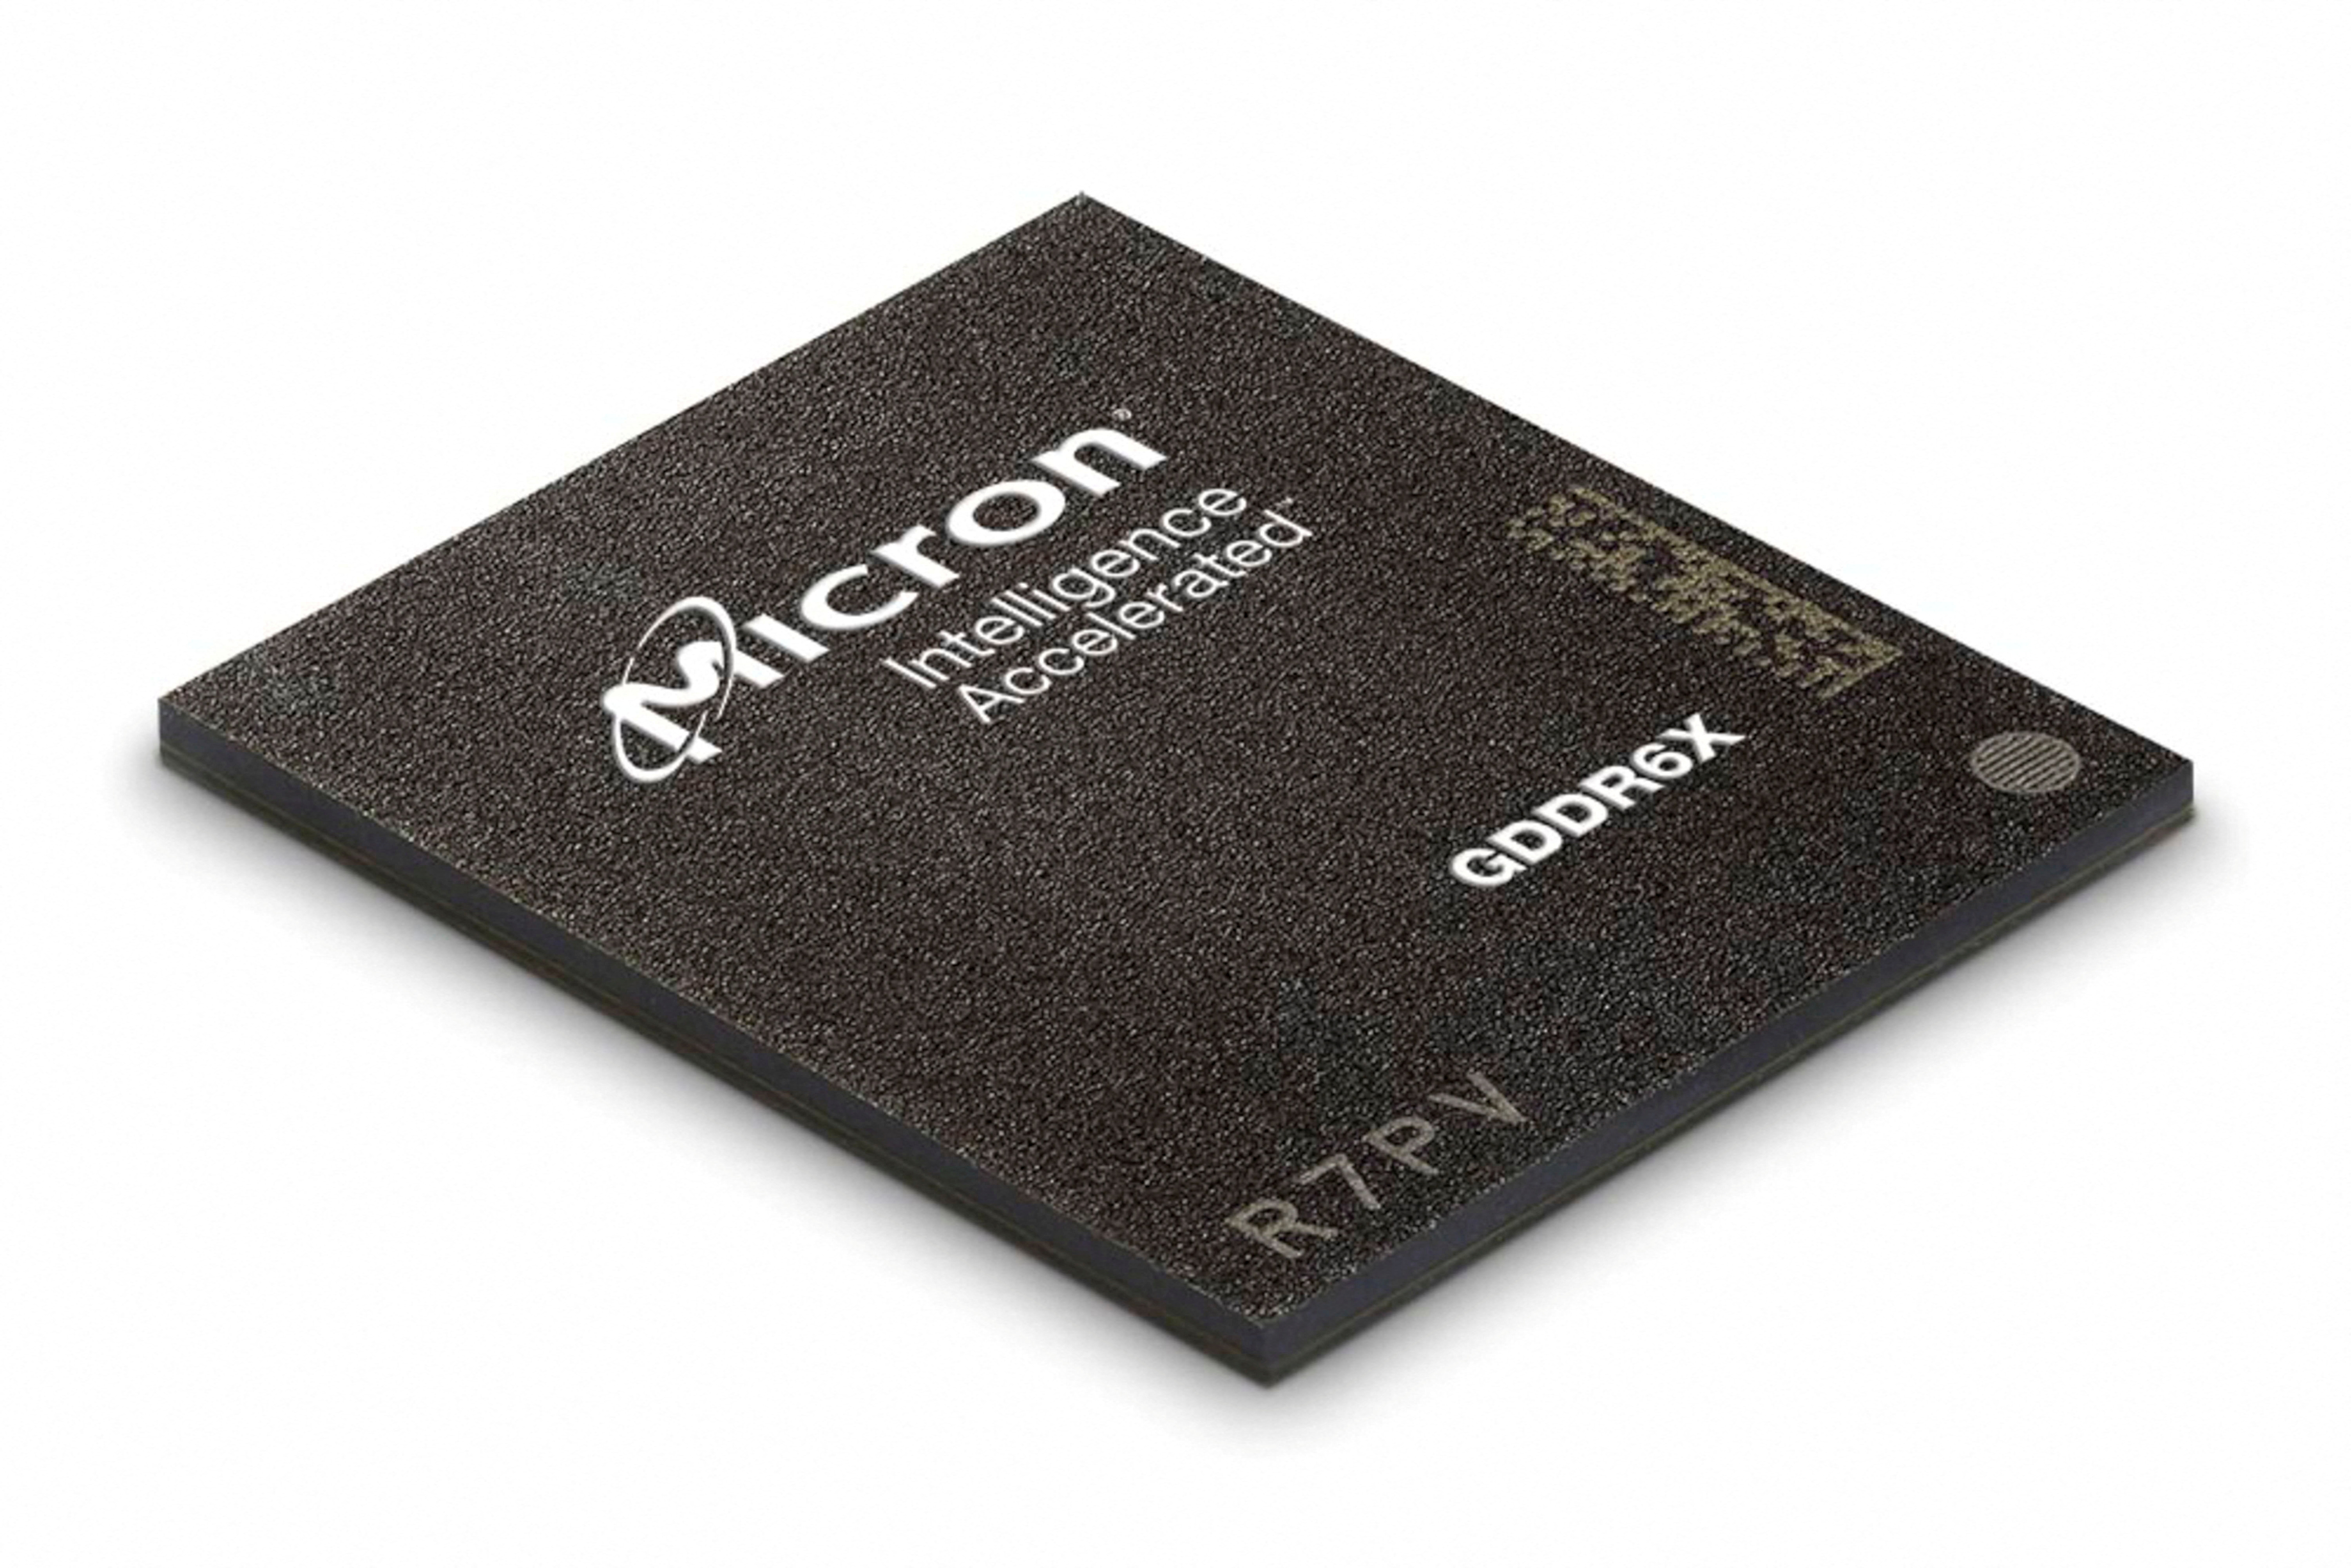 Micron GDDR6X graphics memory solution